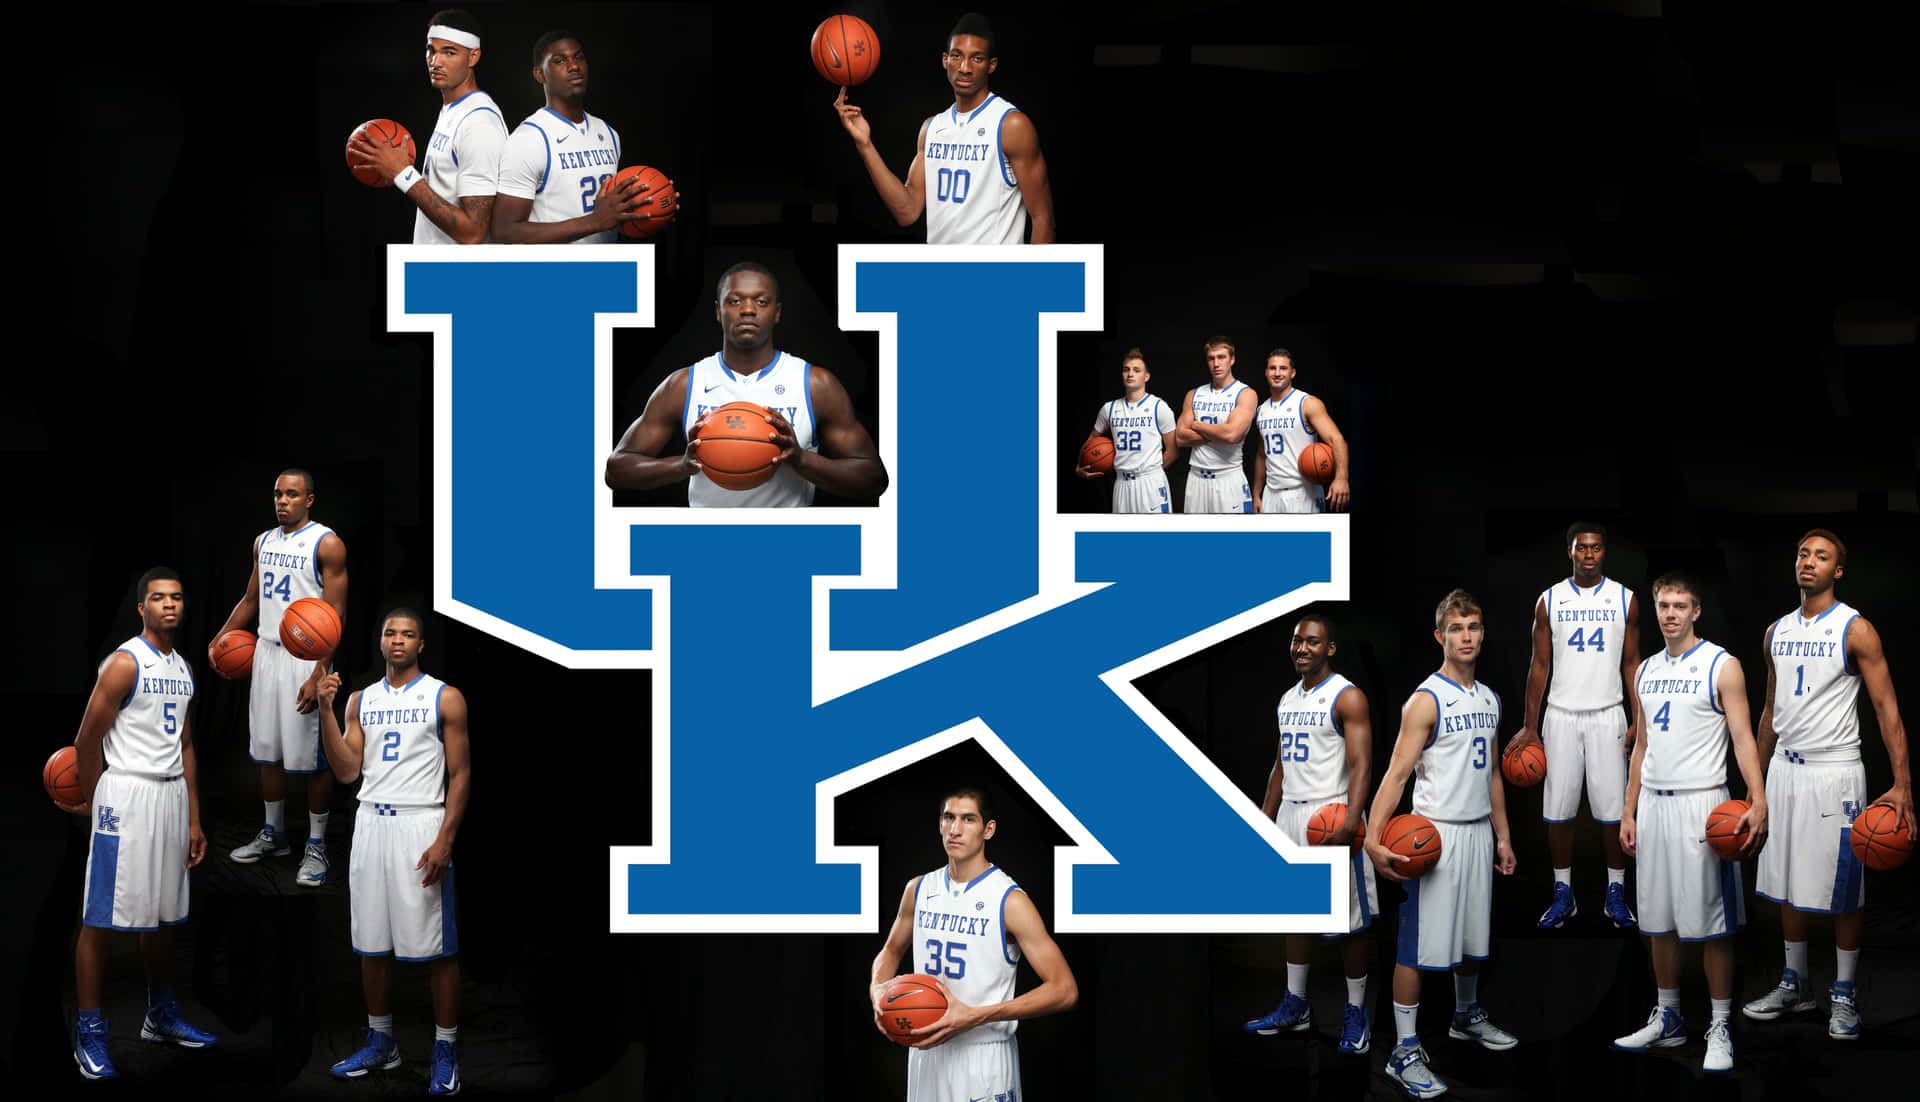 Kentucky Basketball Wallpapers  Walters Wildcat World